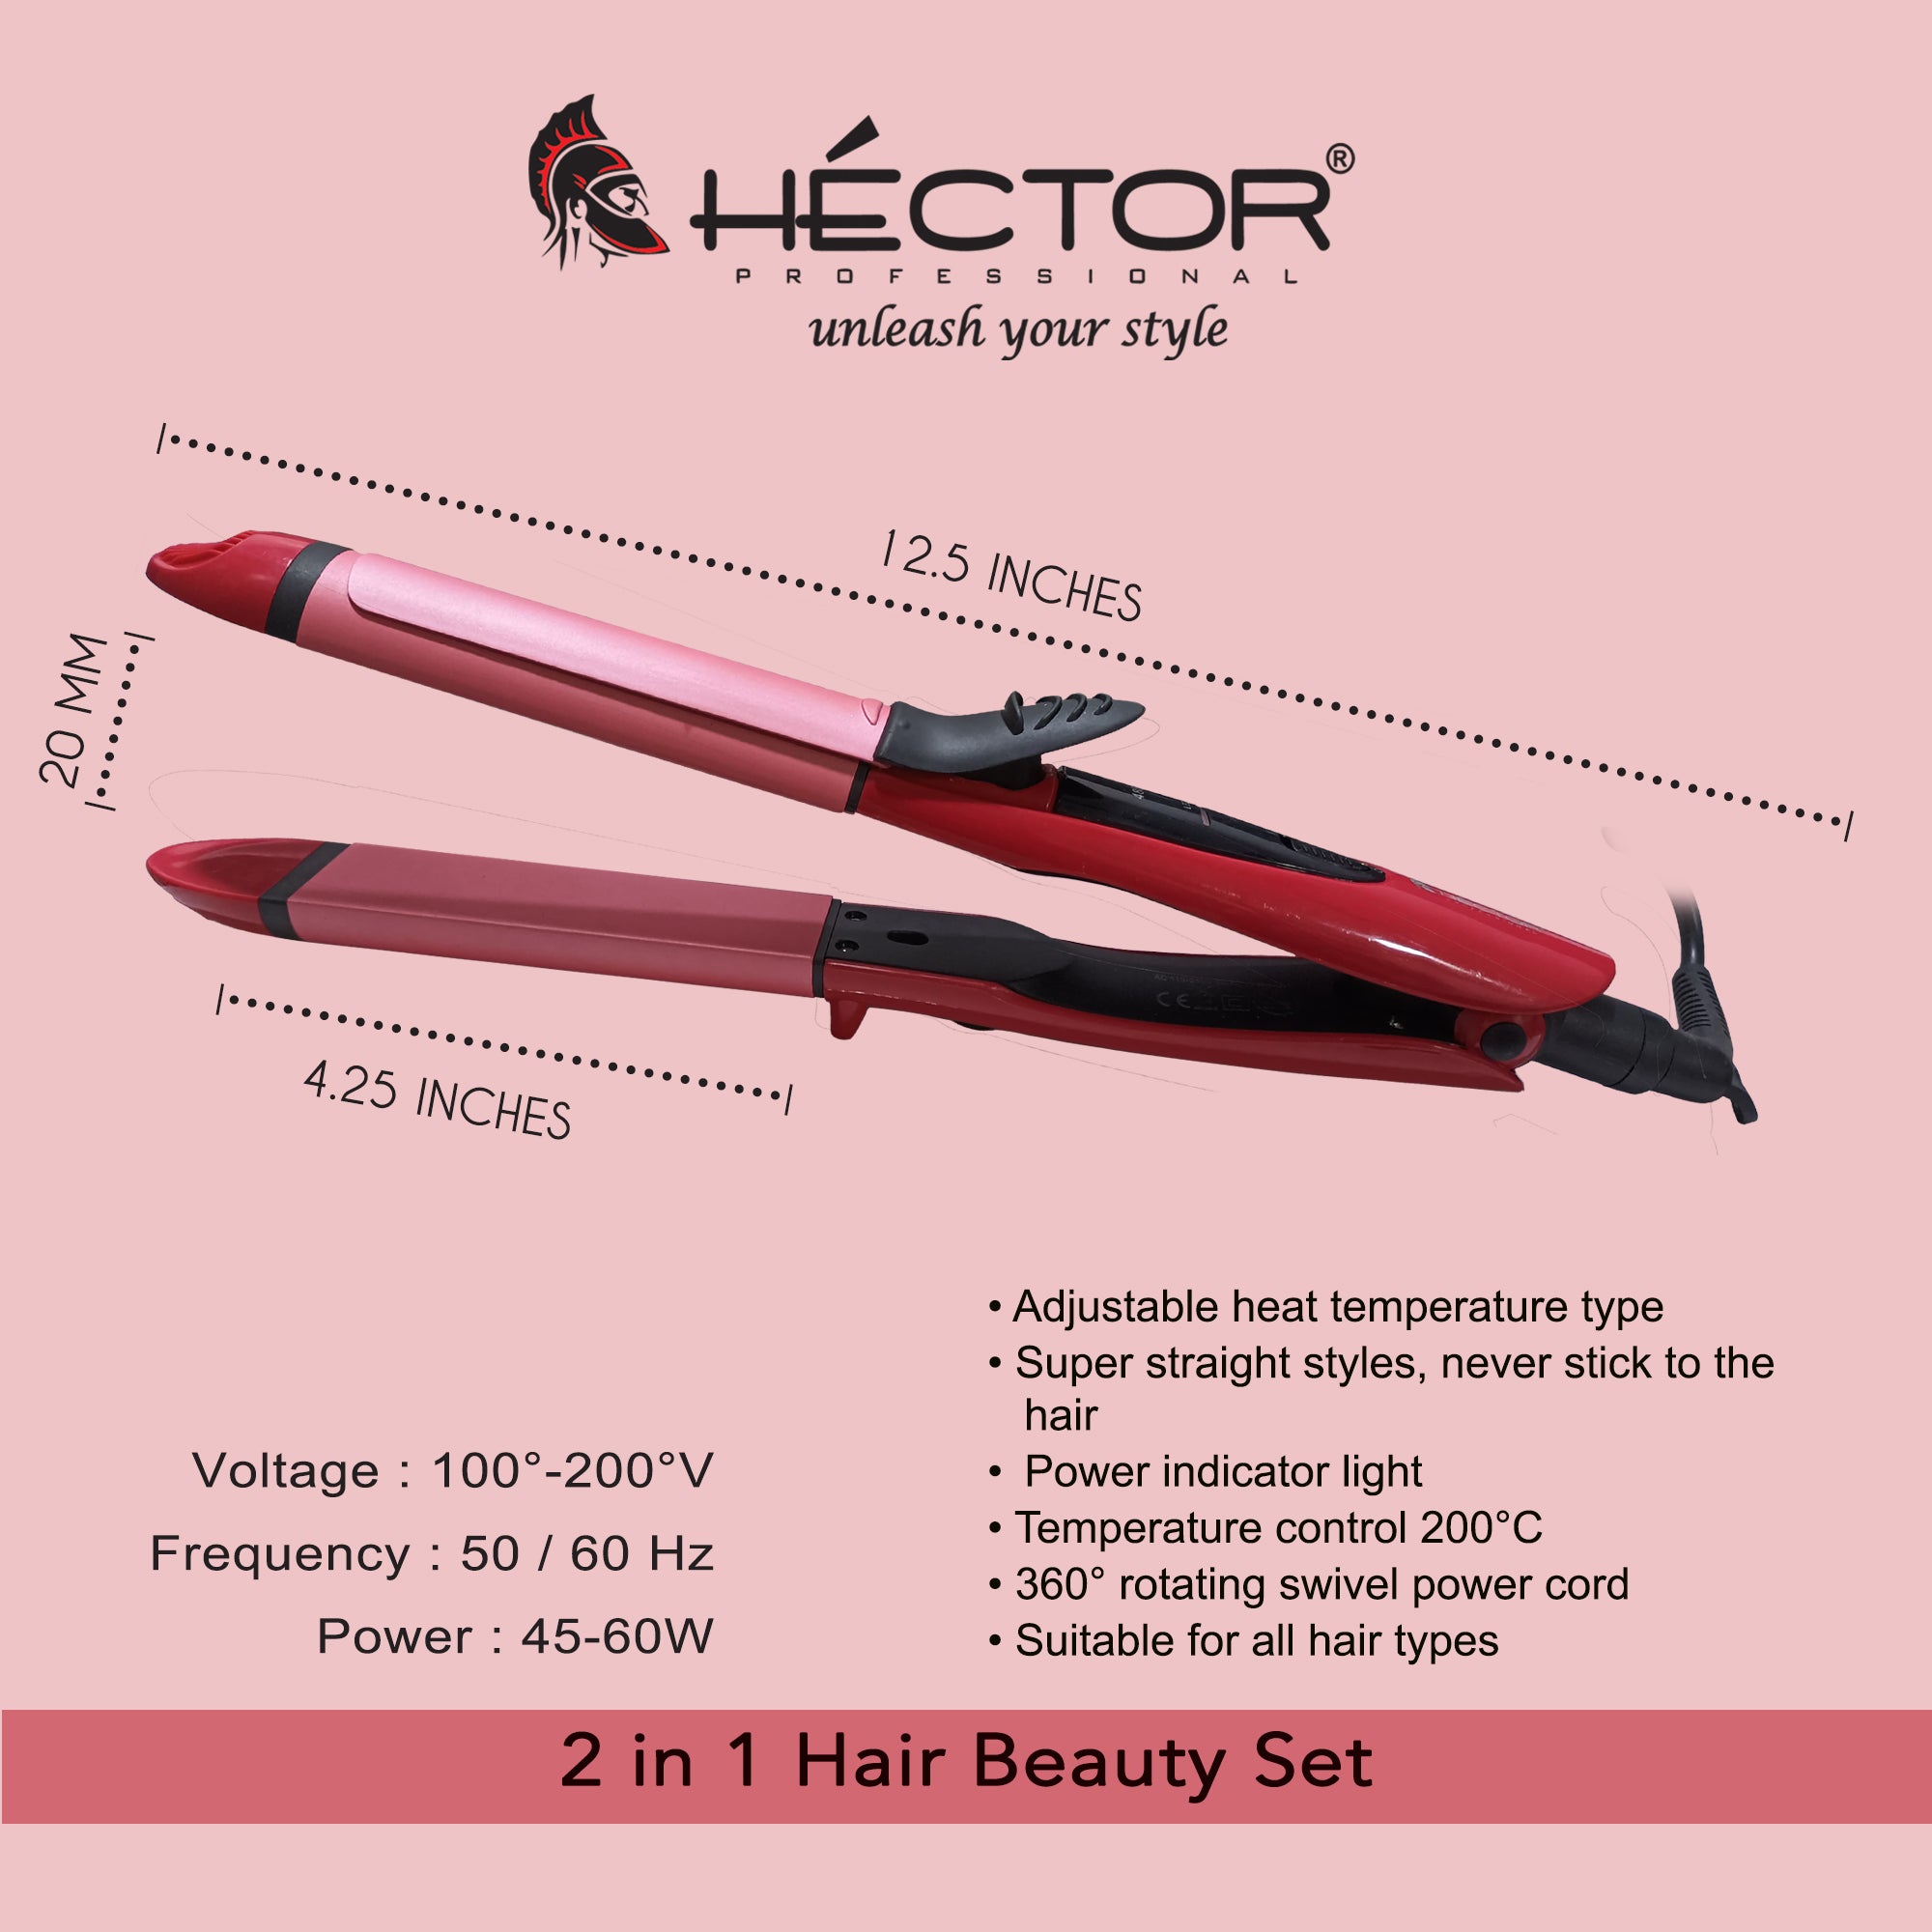 Hector Professional 2 in 1 Hair Beauty Set - Curler & Straightener